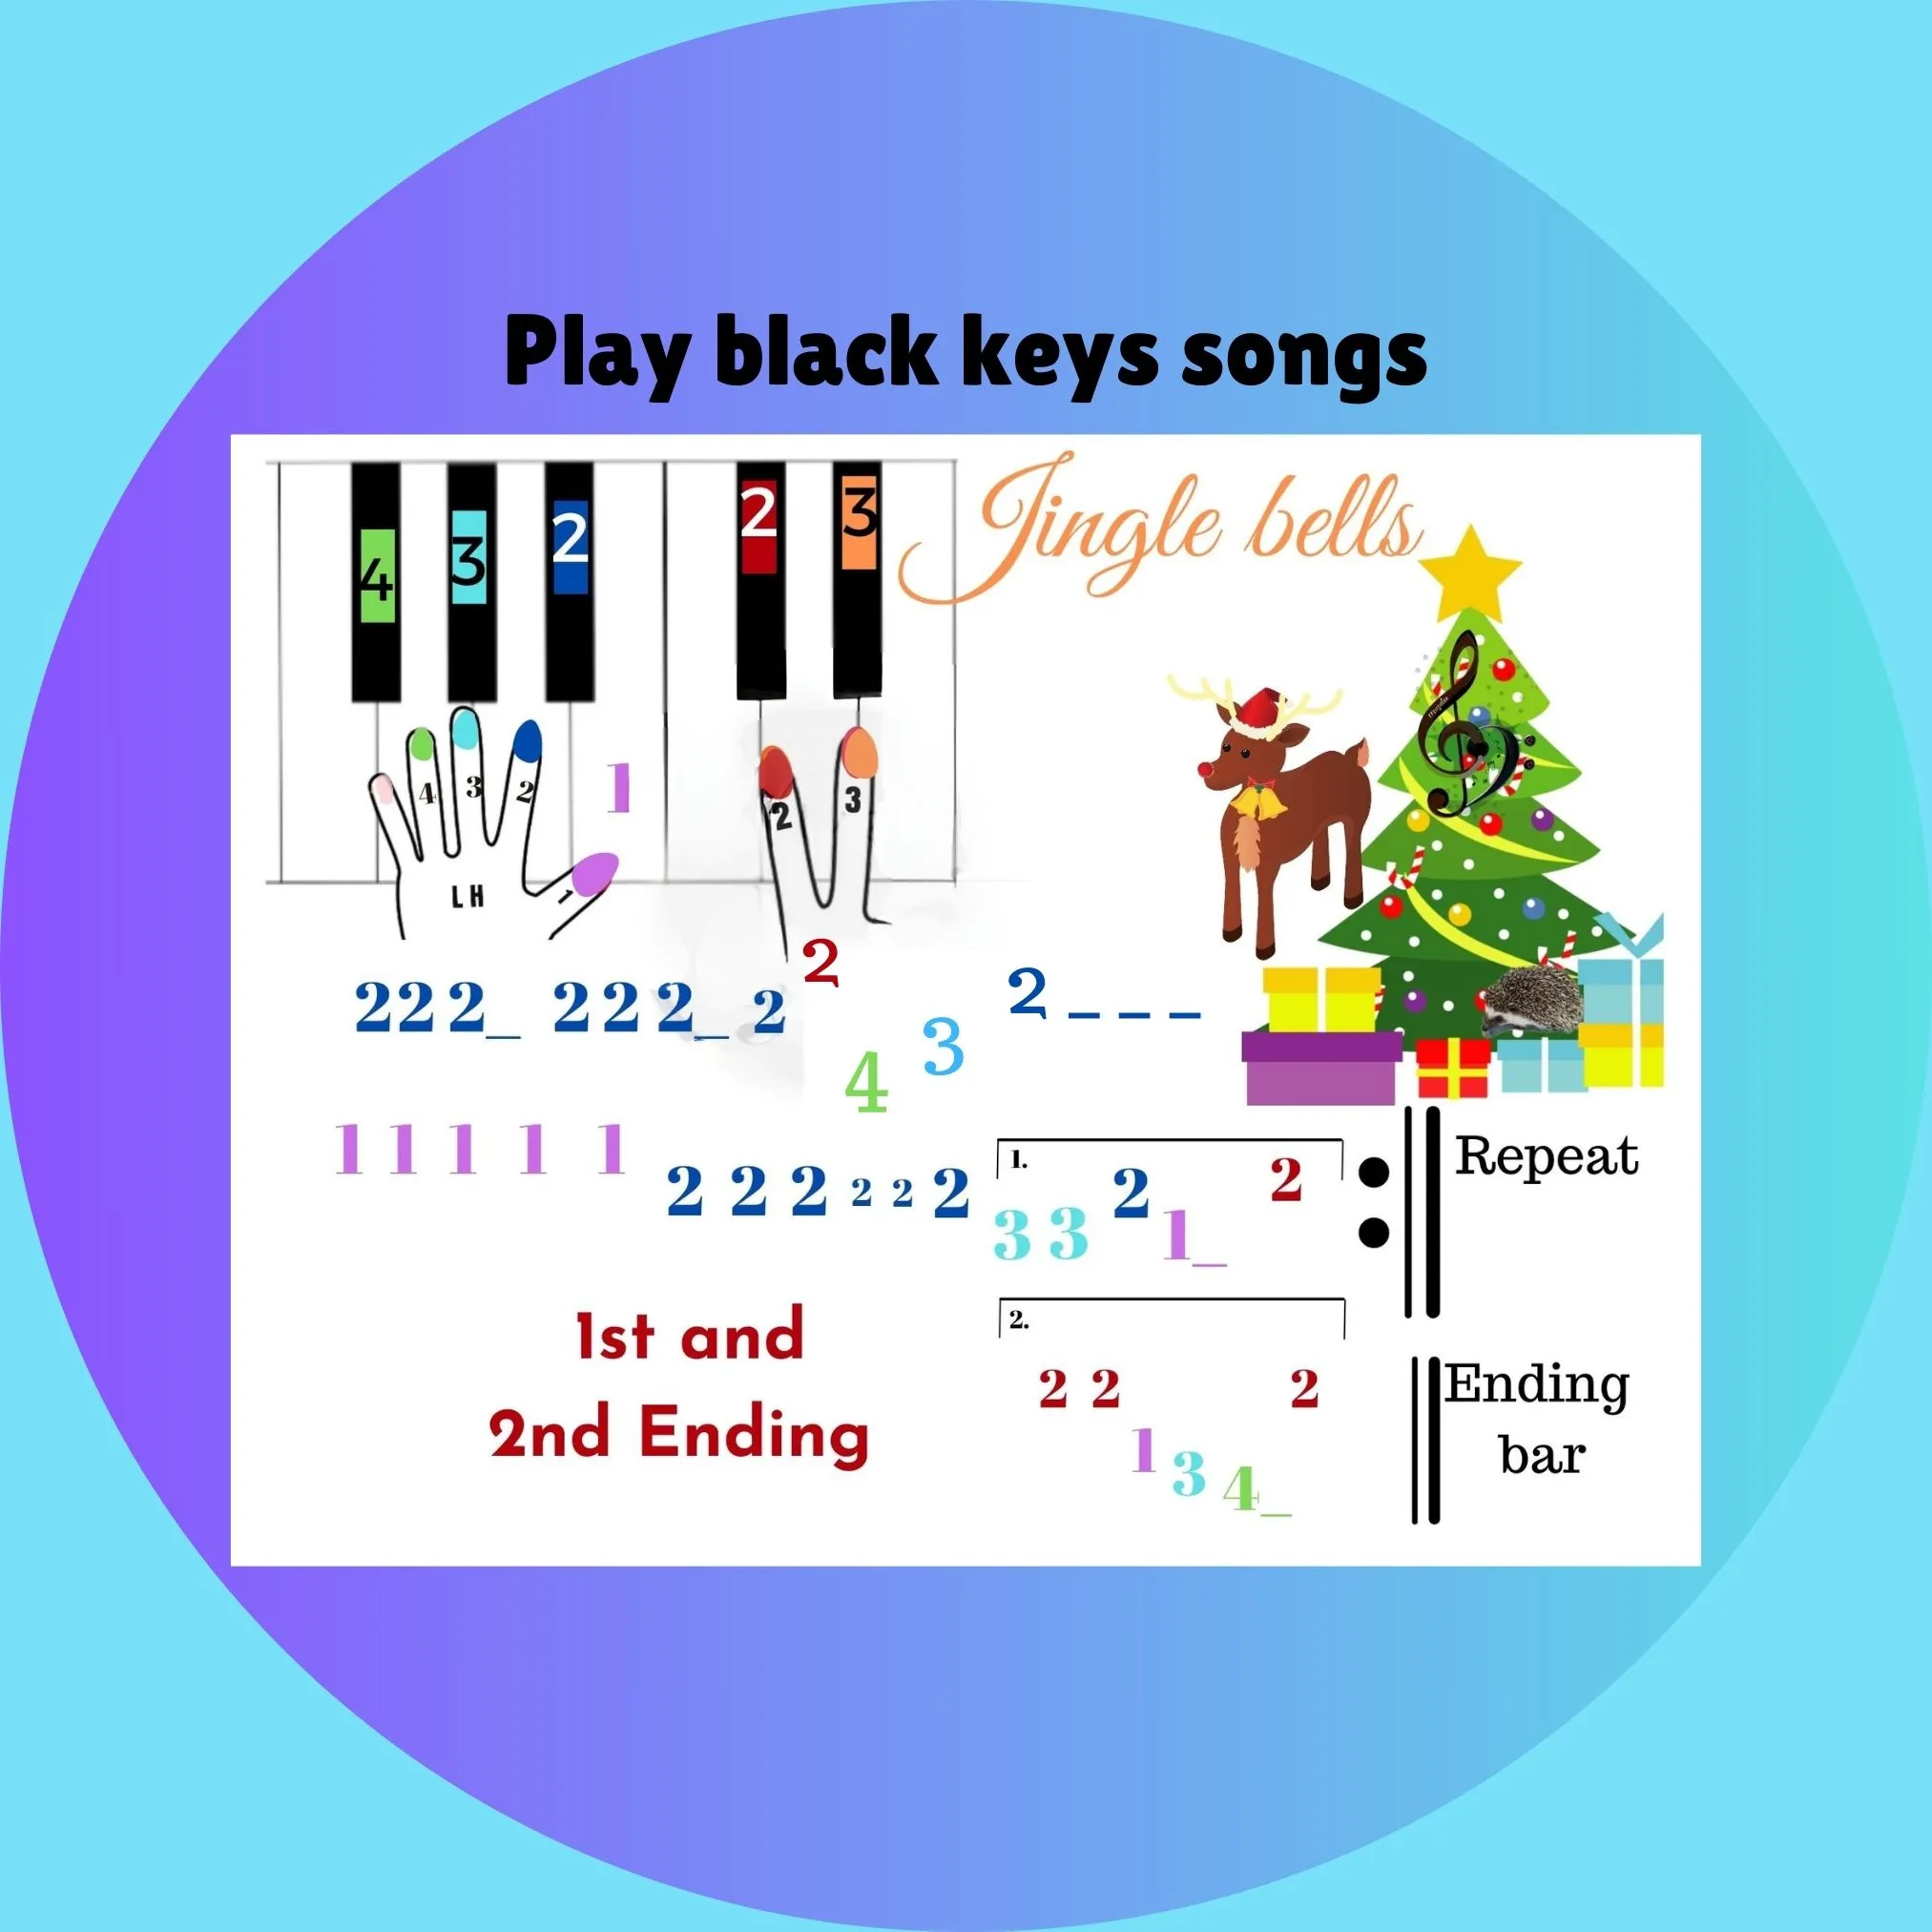 Play black keys song